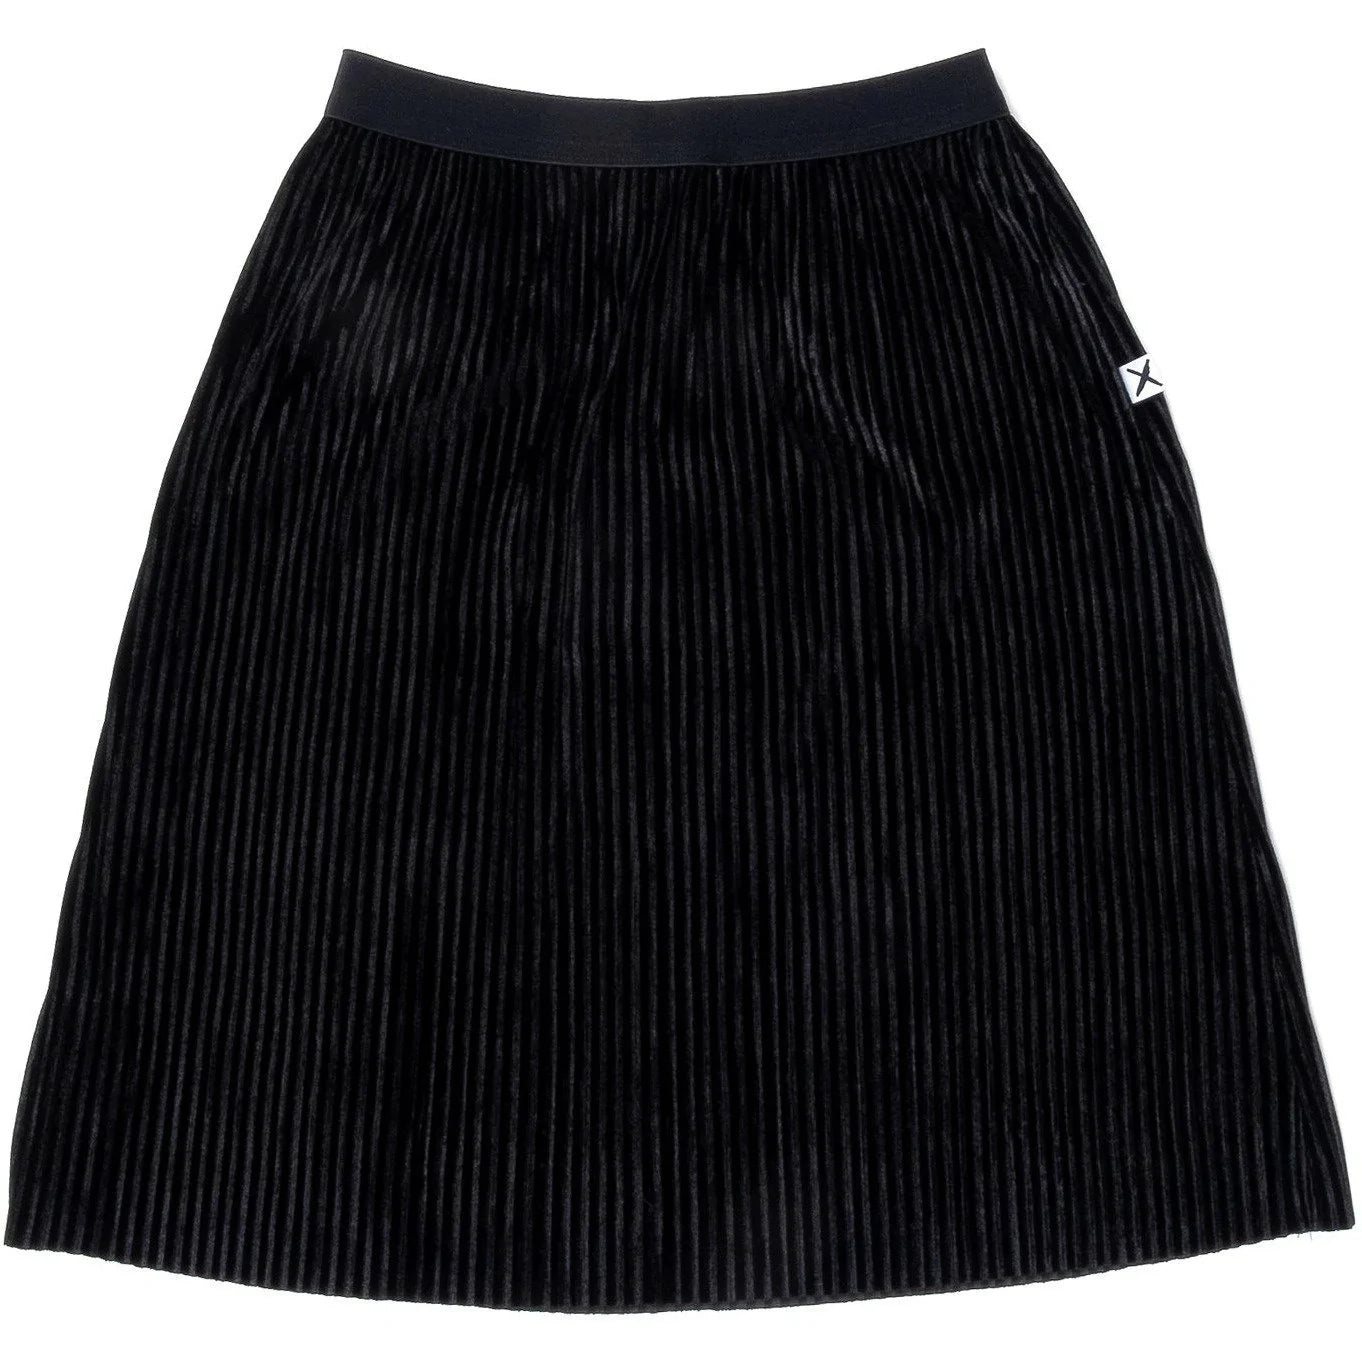 Wintery Cord Skirt - Black Skirt Minti 